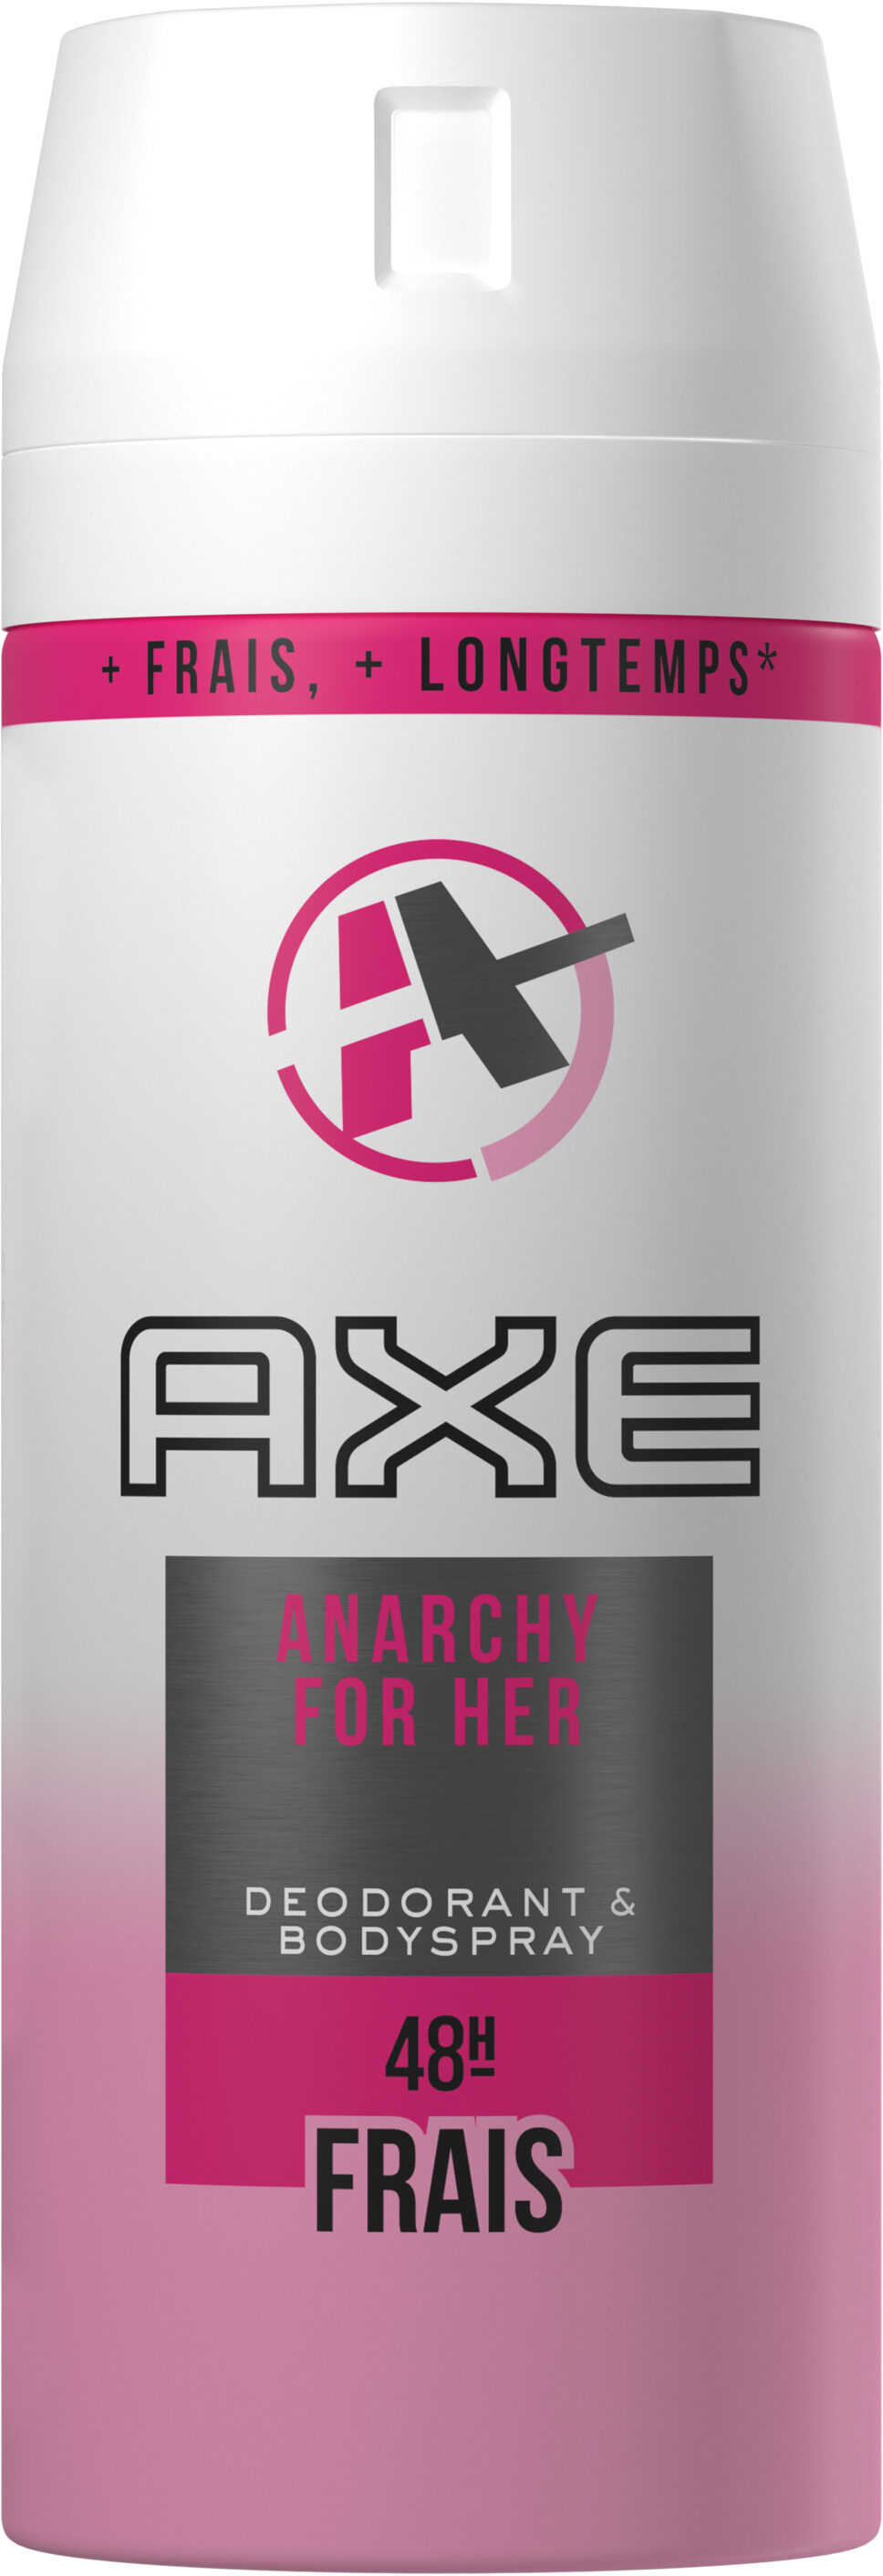 AXE Déodorant Femme Spray Antibactérien Anarchy For Her - Produit - fr